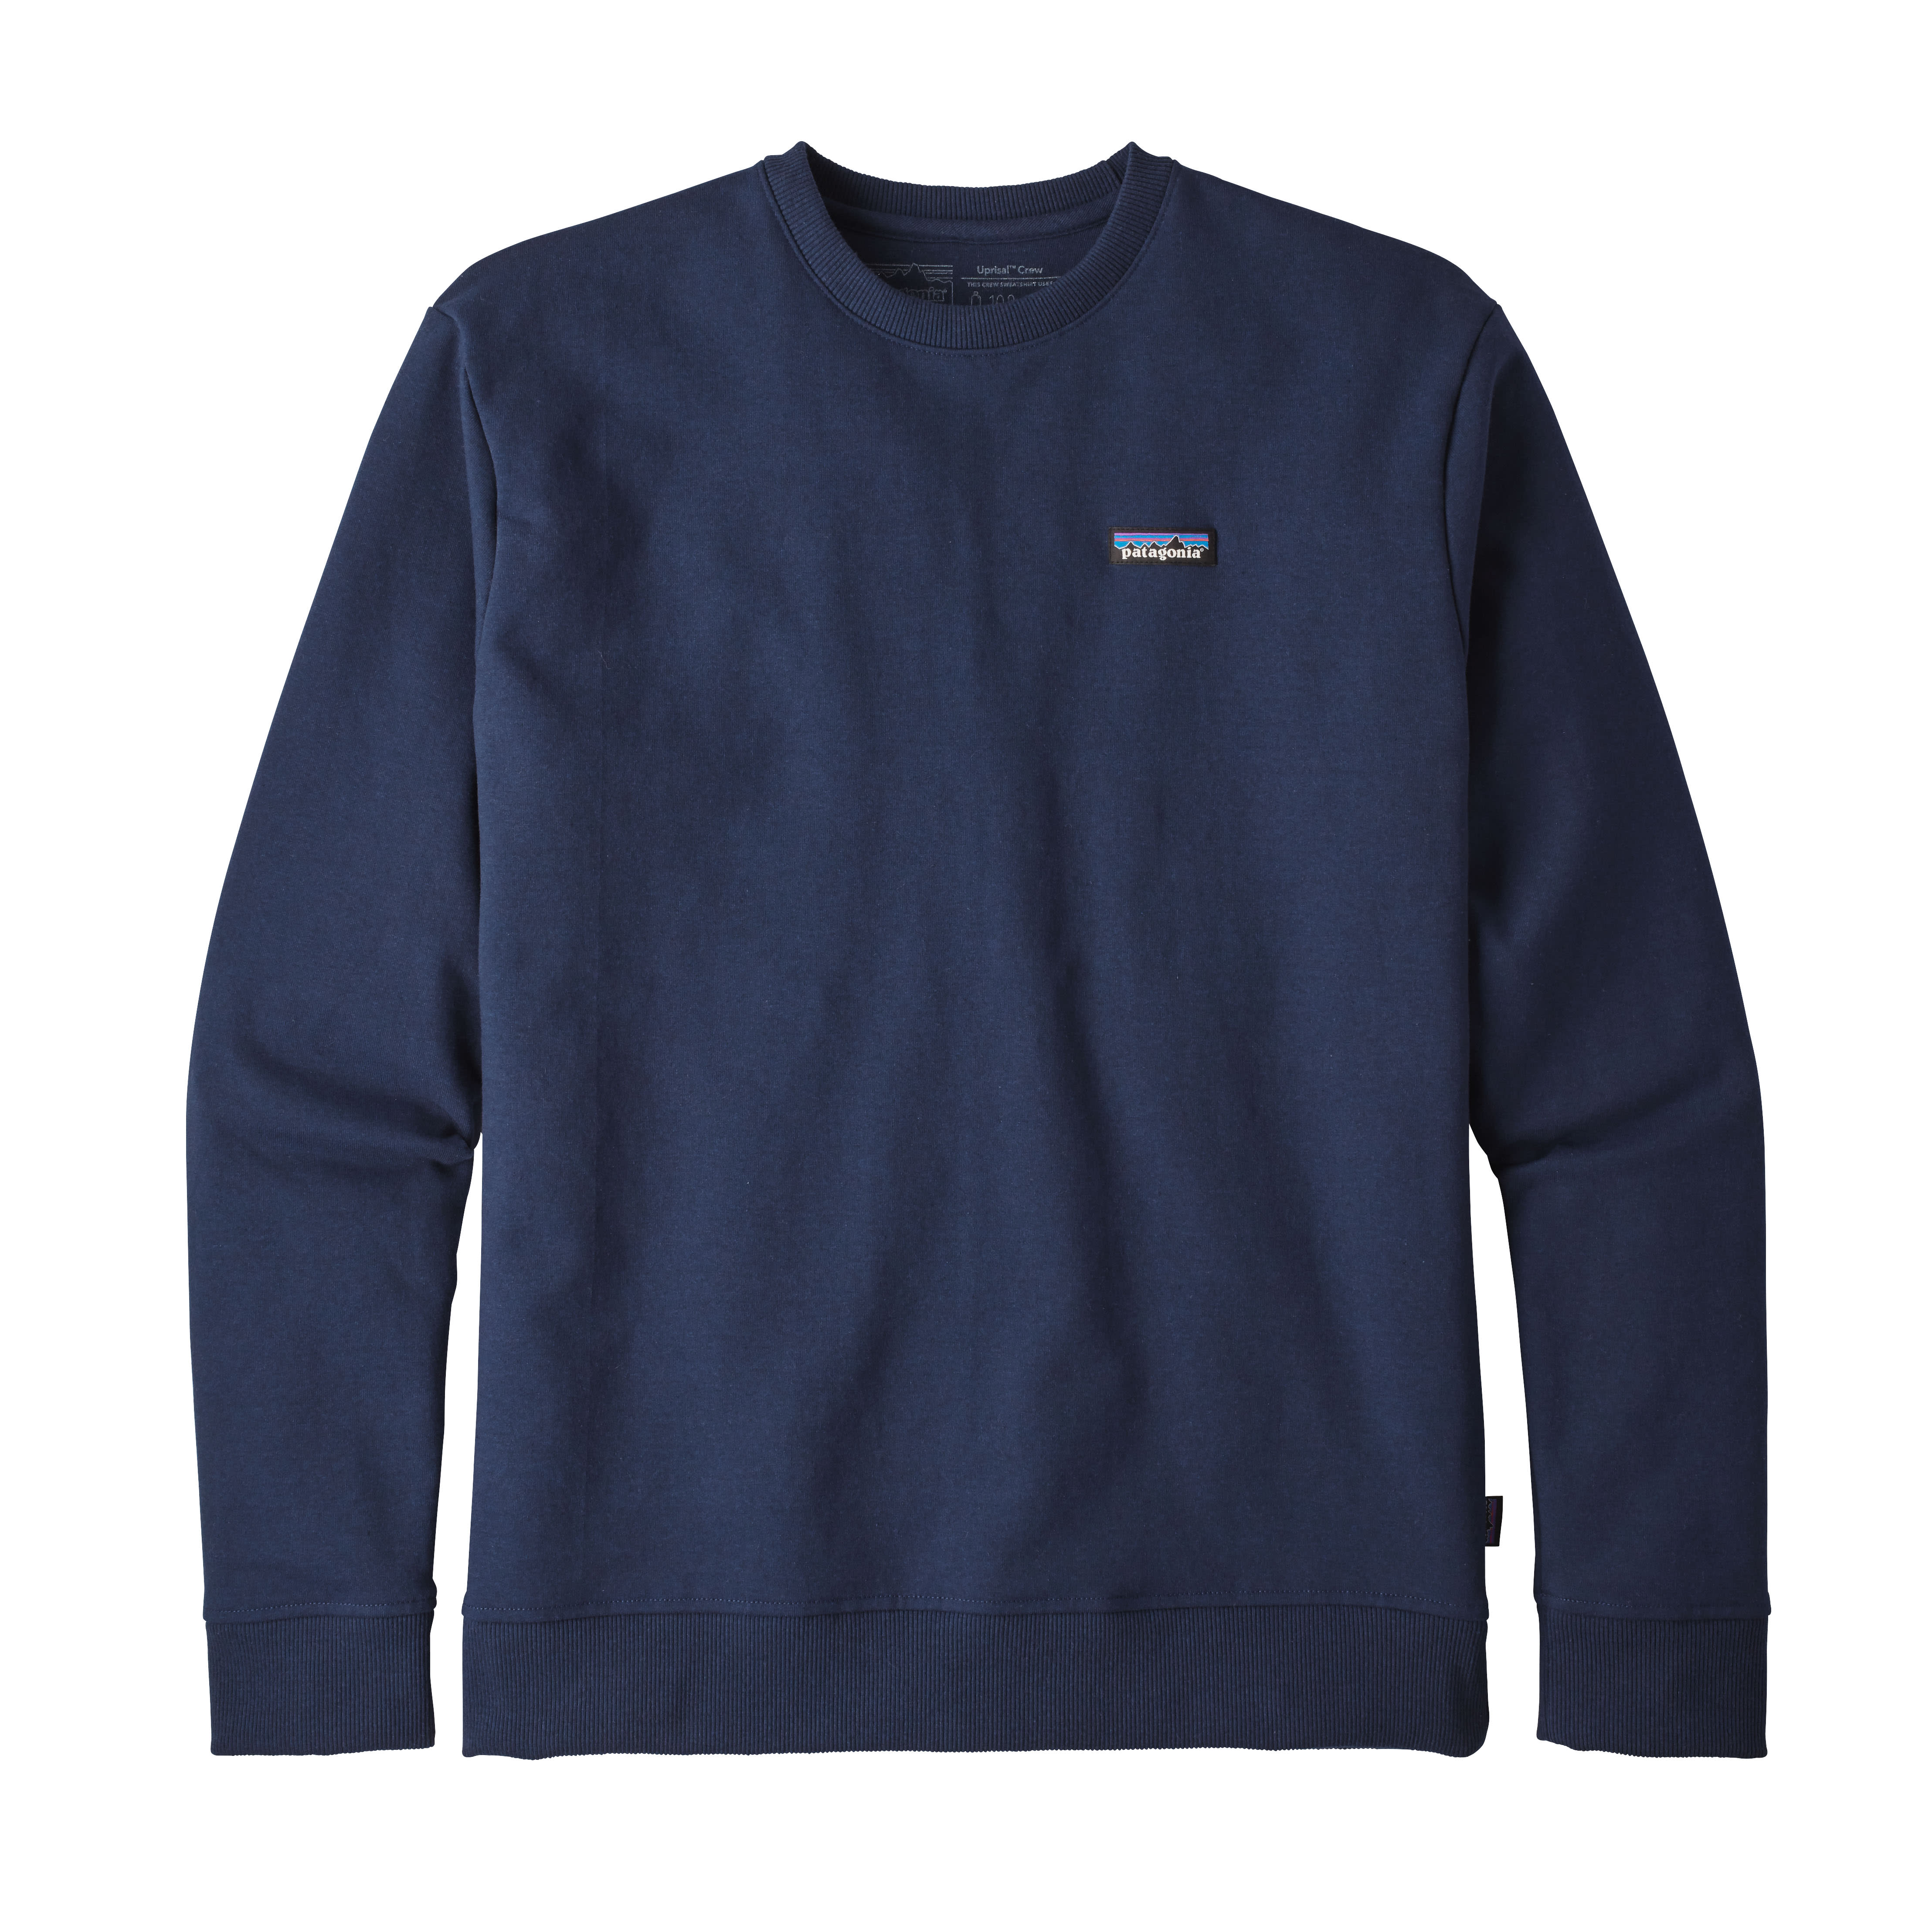 Patagonia Men's P-6 Label Uprisal Crew Sweatshirt - Outnorth